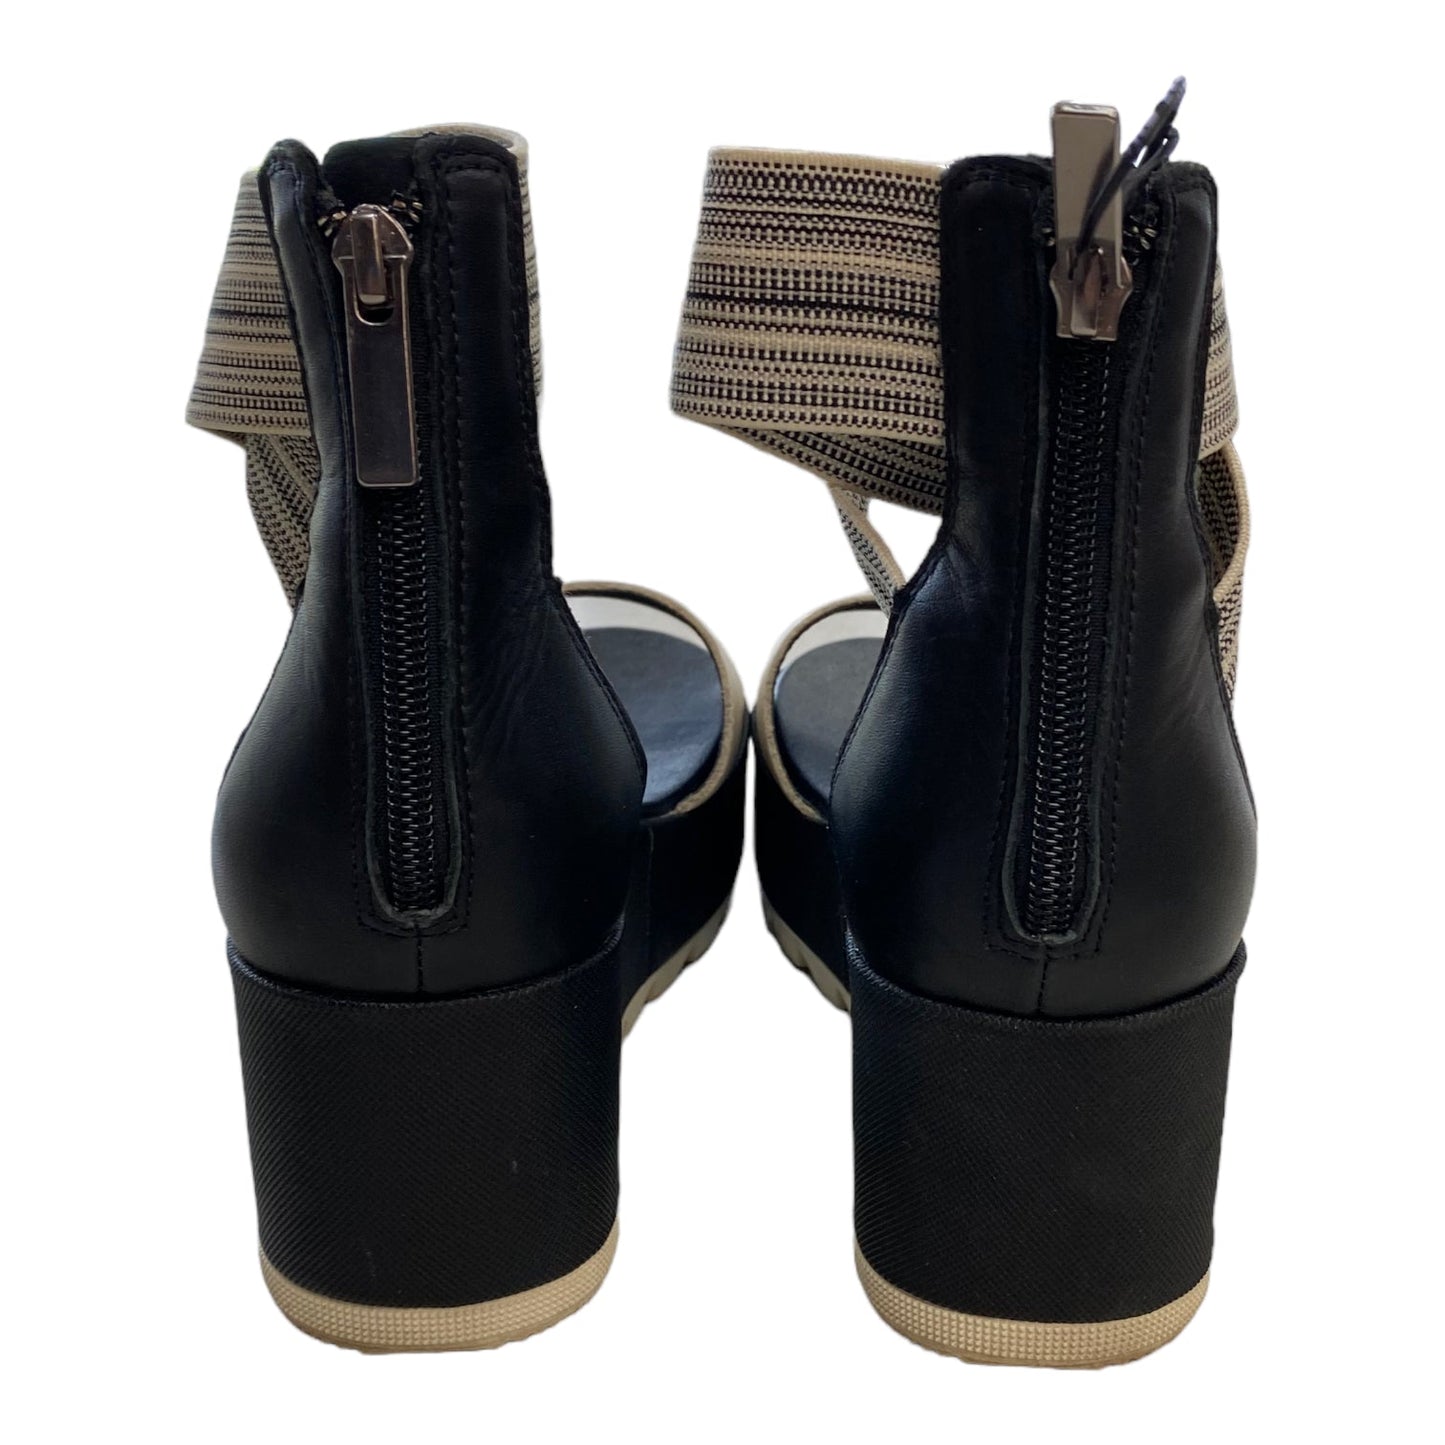 Black & White Sandals Heels Block Sorel, Size 8.5